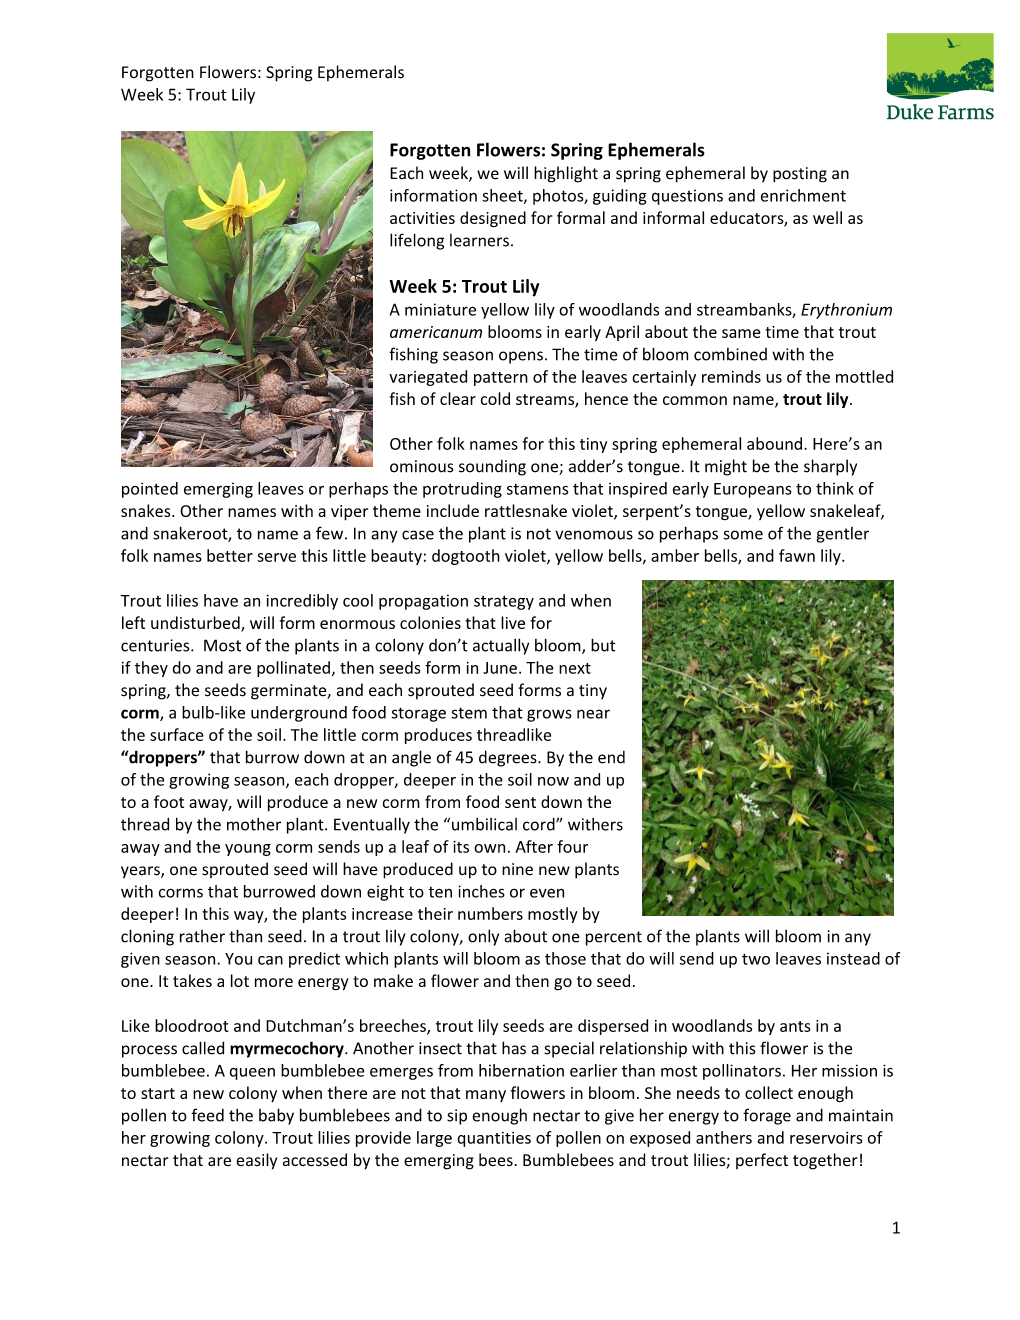 Forgotten Flowers: Spring Ephemerals Week 5: Trout Lily